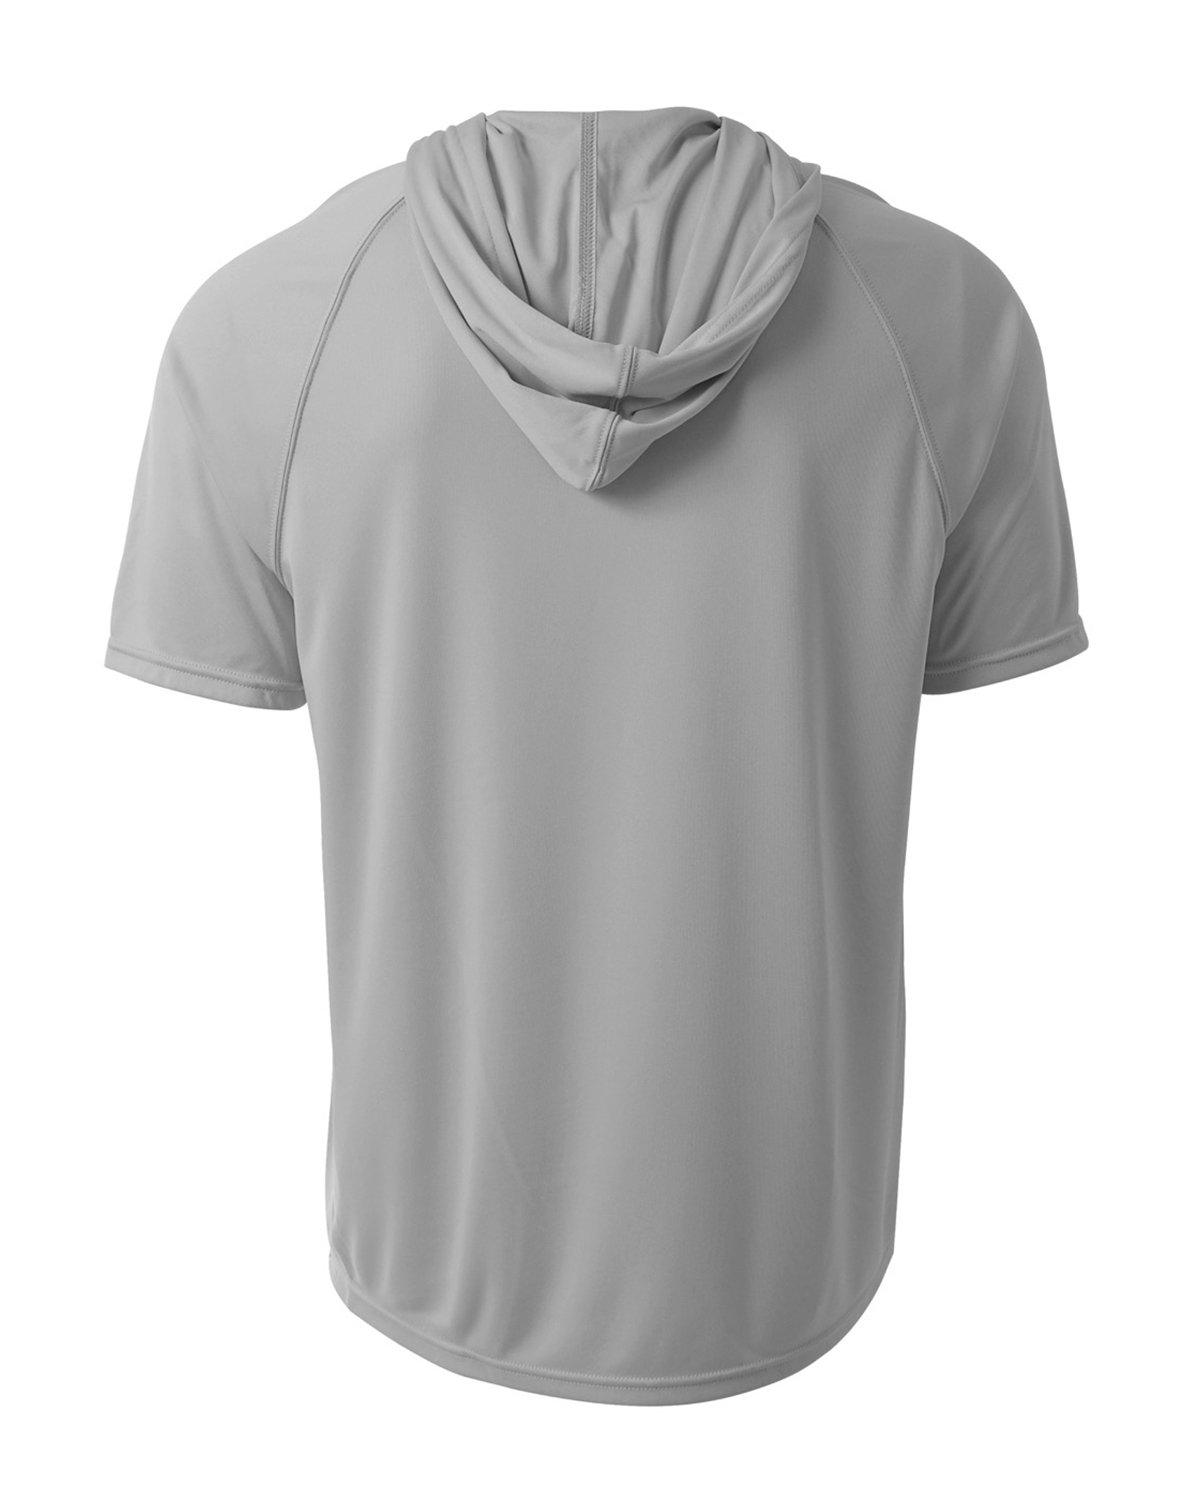 A4 Men's Cooling Performance Hooded T-shirt | alphabroder